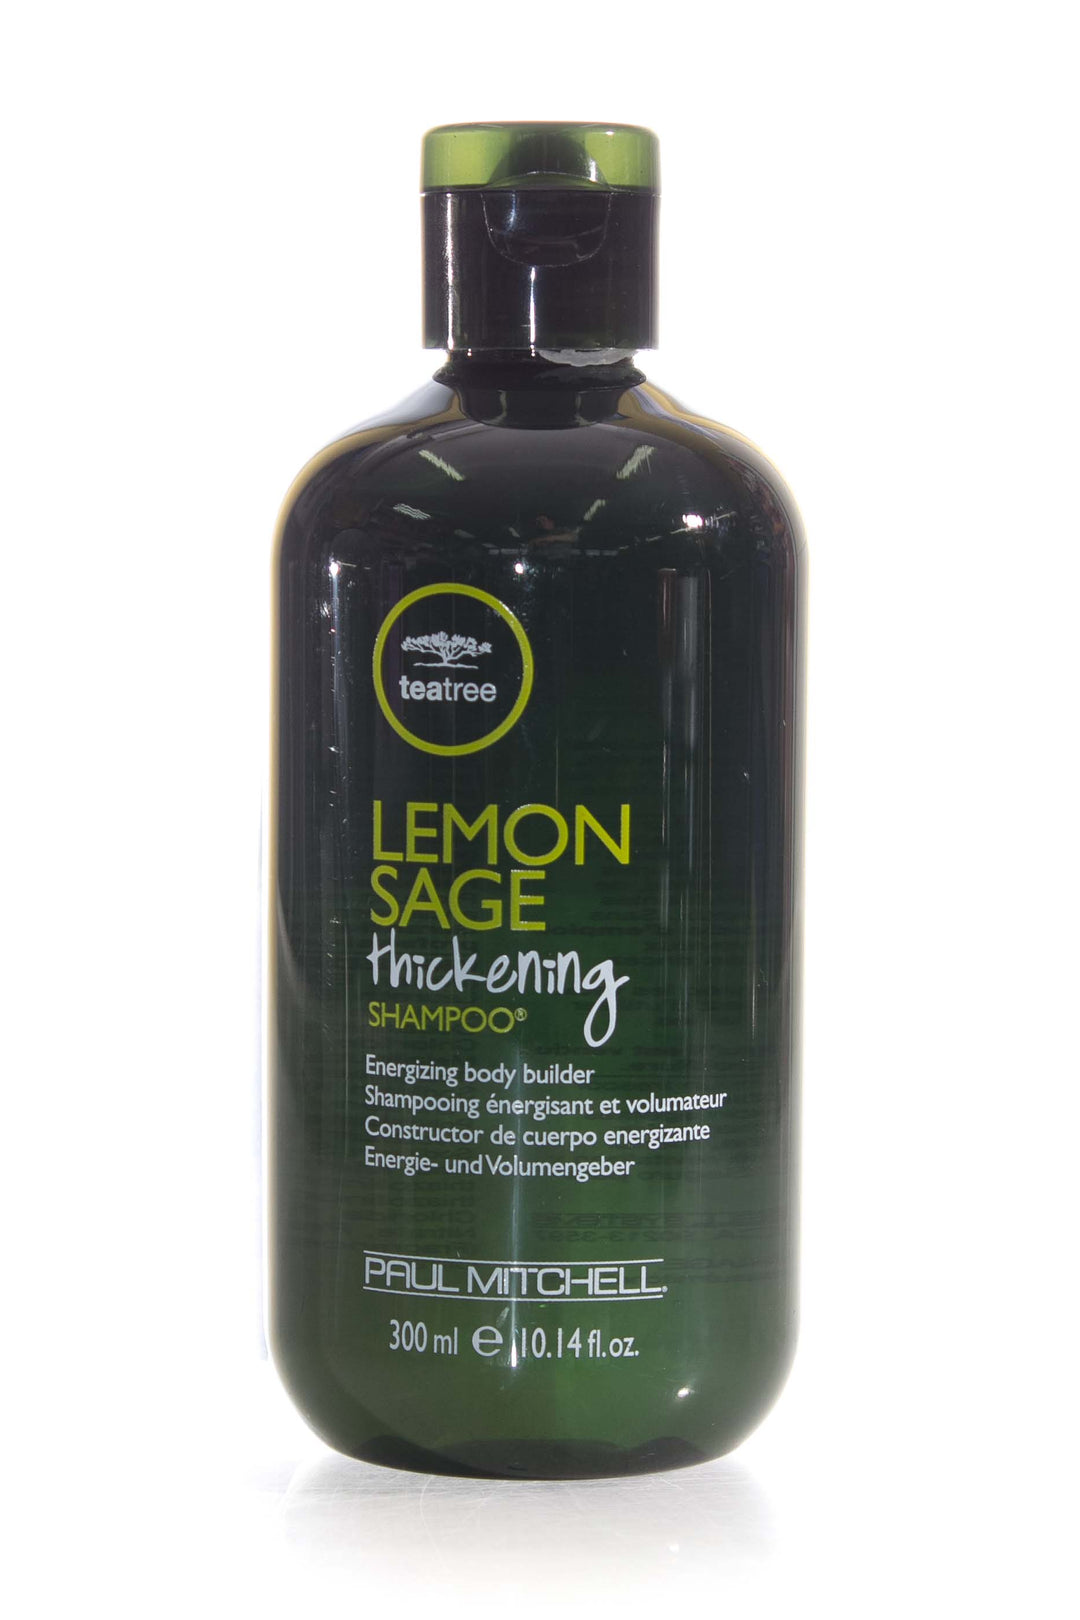 paul-mitchell-tea-tree-lemon-sage-thickening-shampoo-300ml